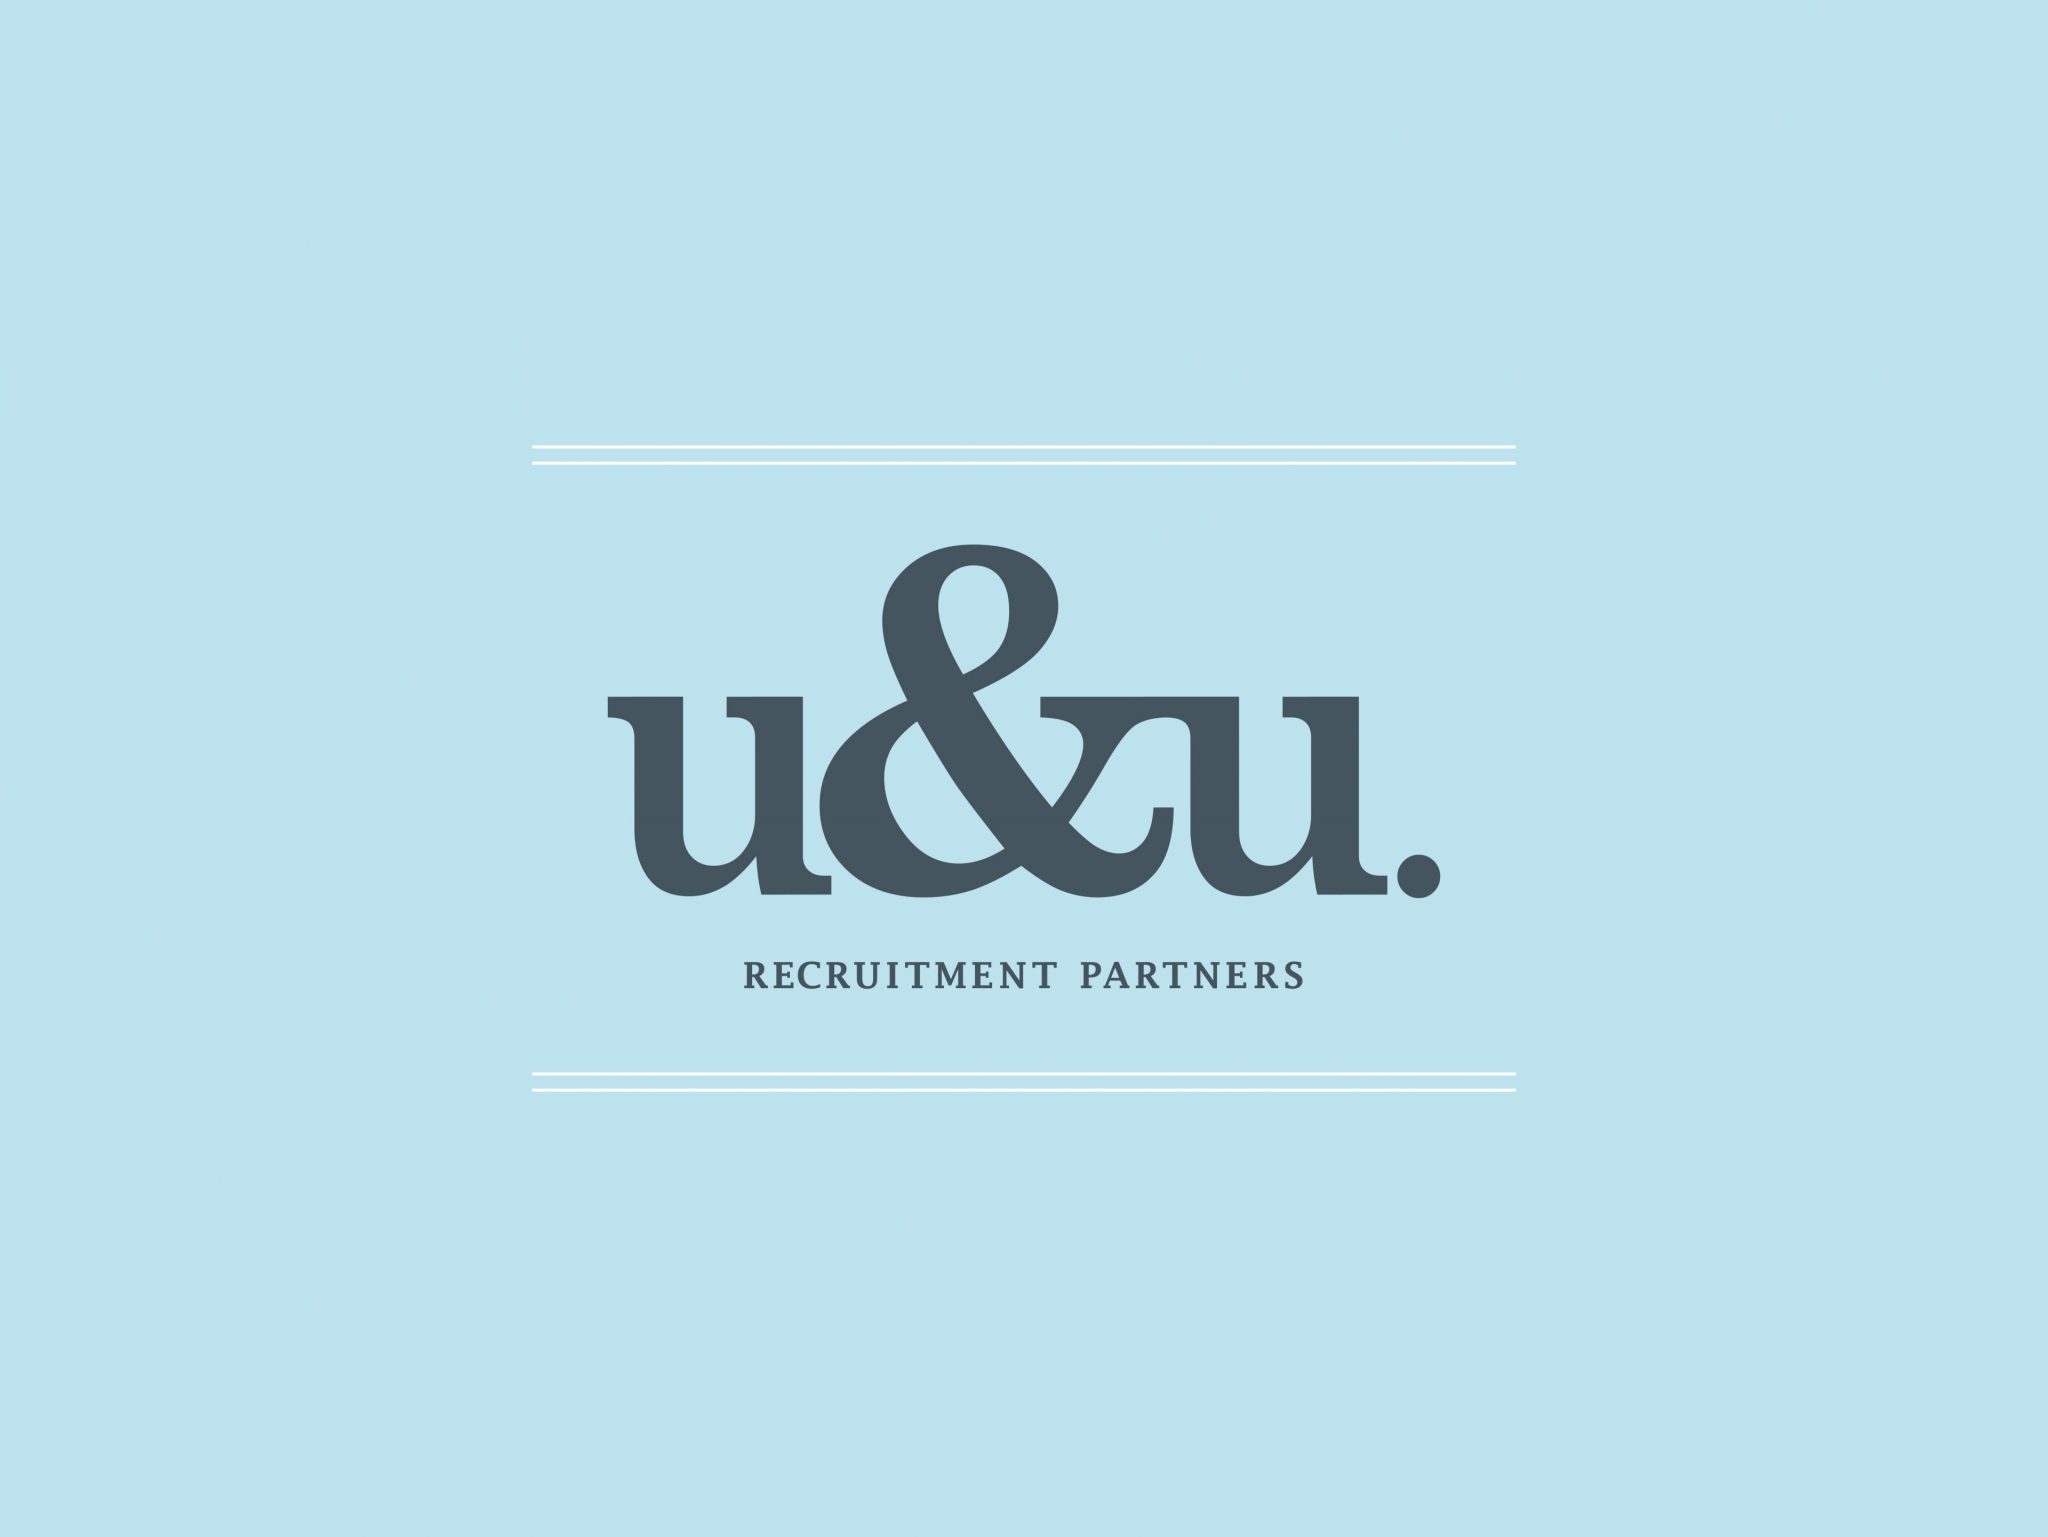 u&u recruitment partners brand identity by branding company brisbane DAIS